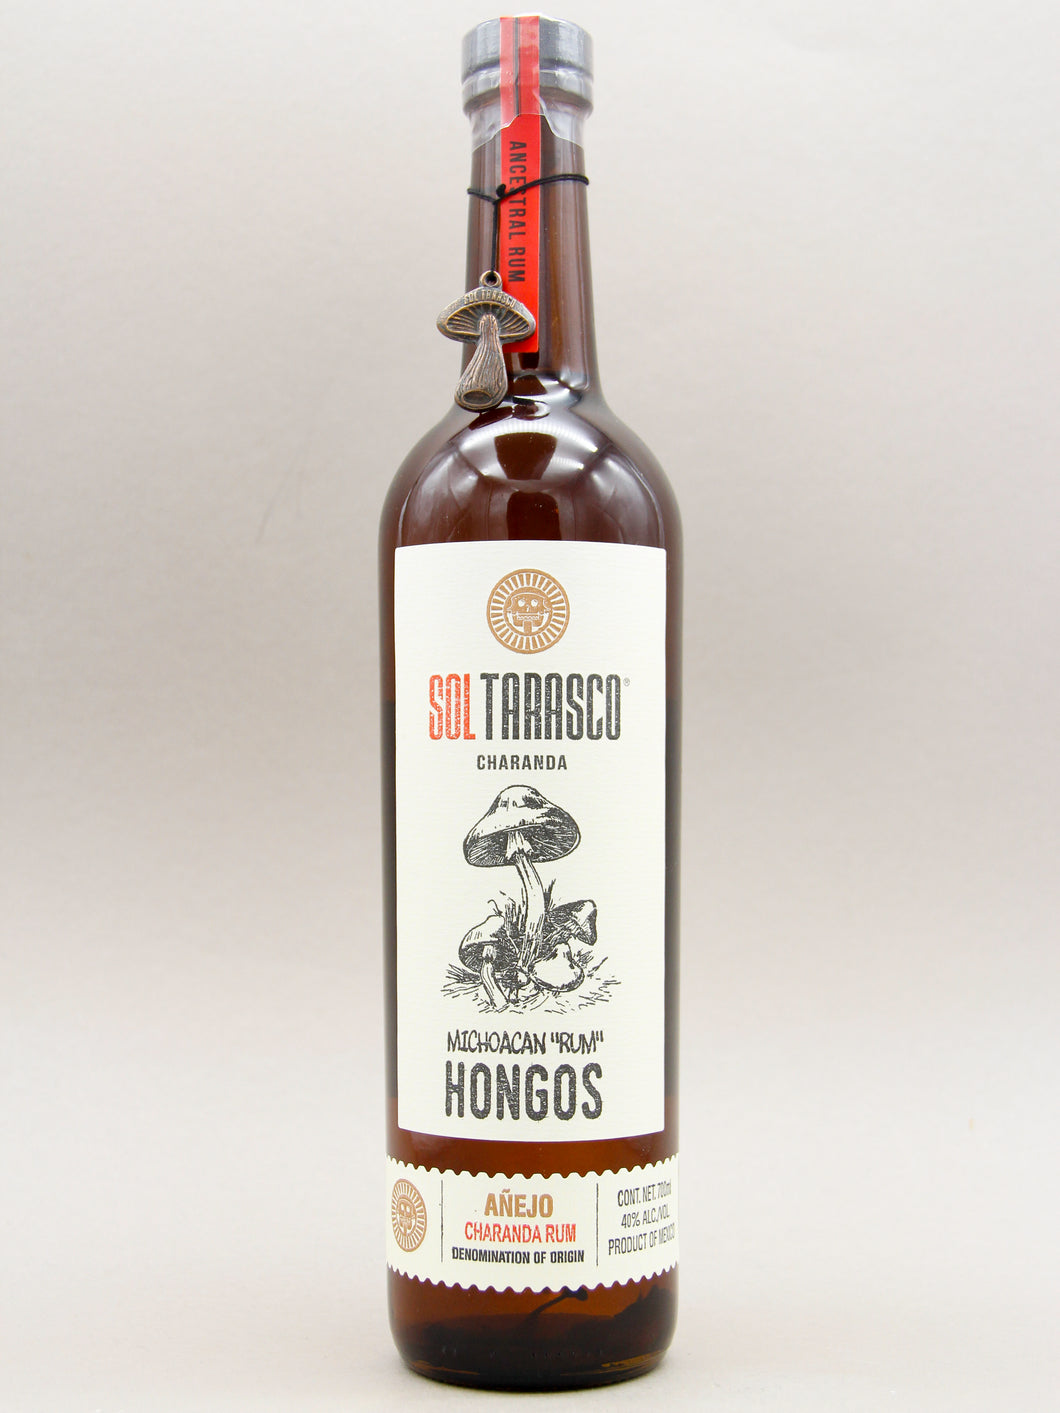 Sol Tarasco, Añejo Charanda Rum Hongos, Mexico (40%, 70cl)